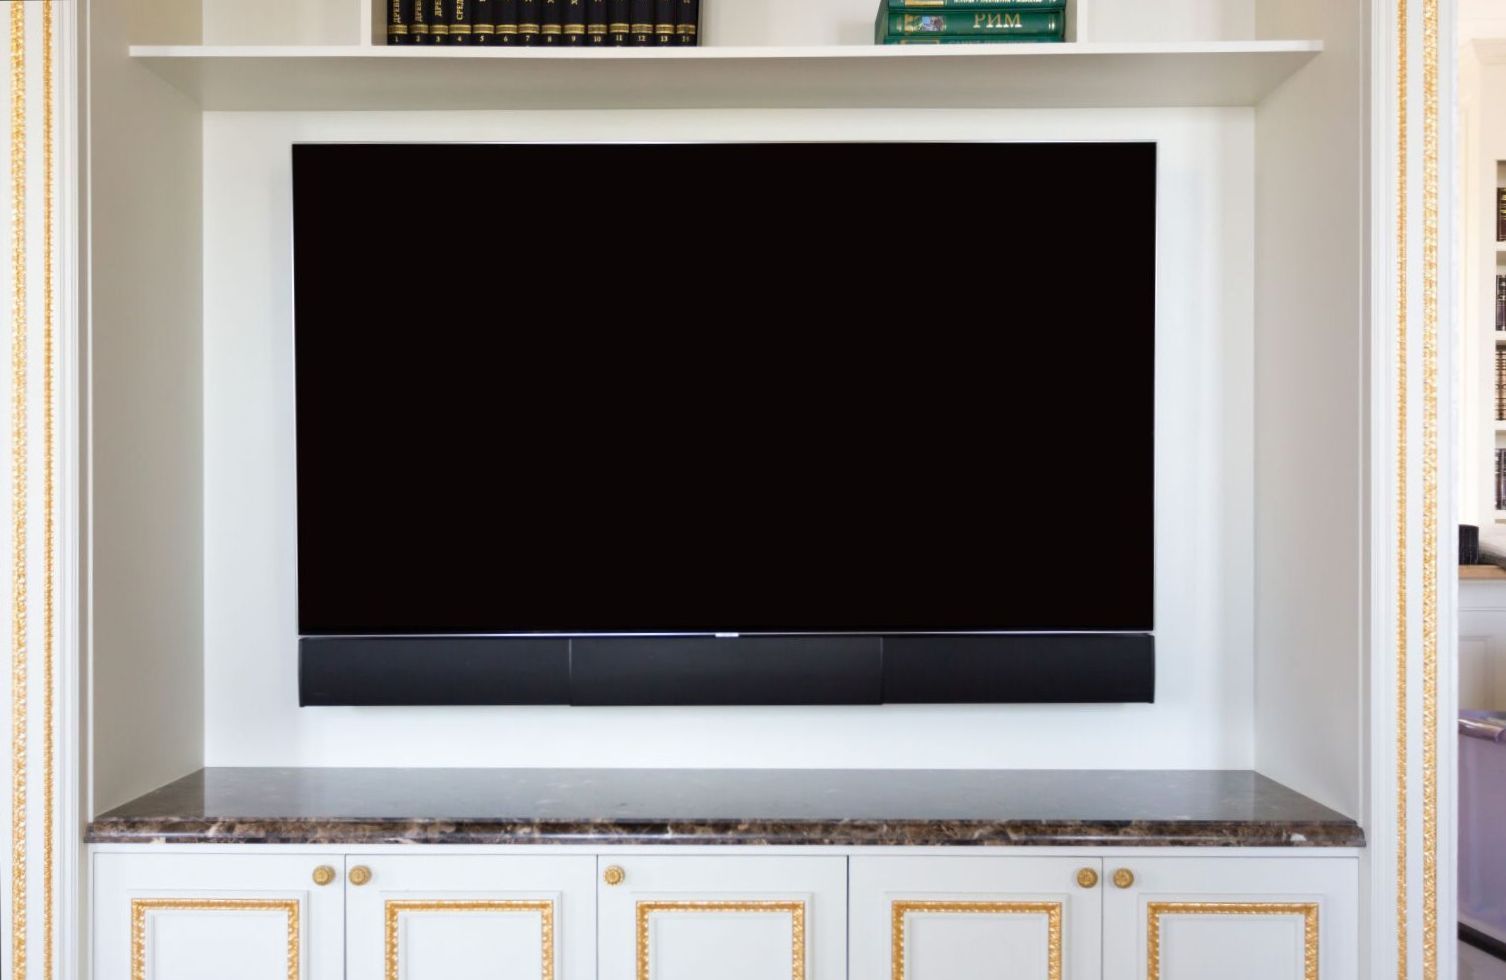 Null TV de pantalla plana grande SAMSUNG QE75Q7FAMTXXC, 190 cm.

Versión supuest&hellip;